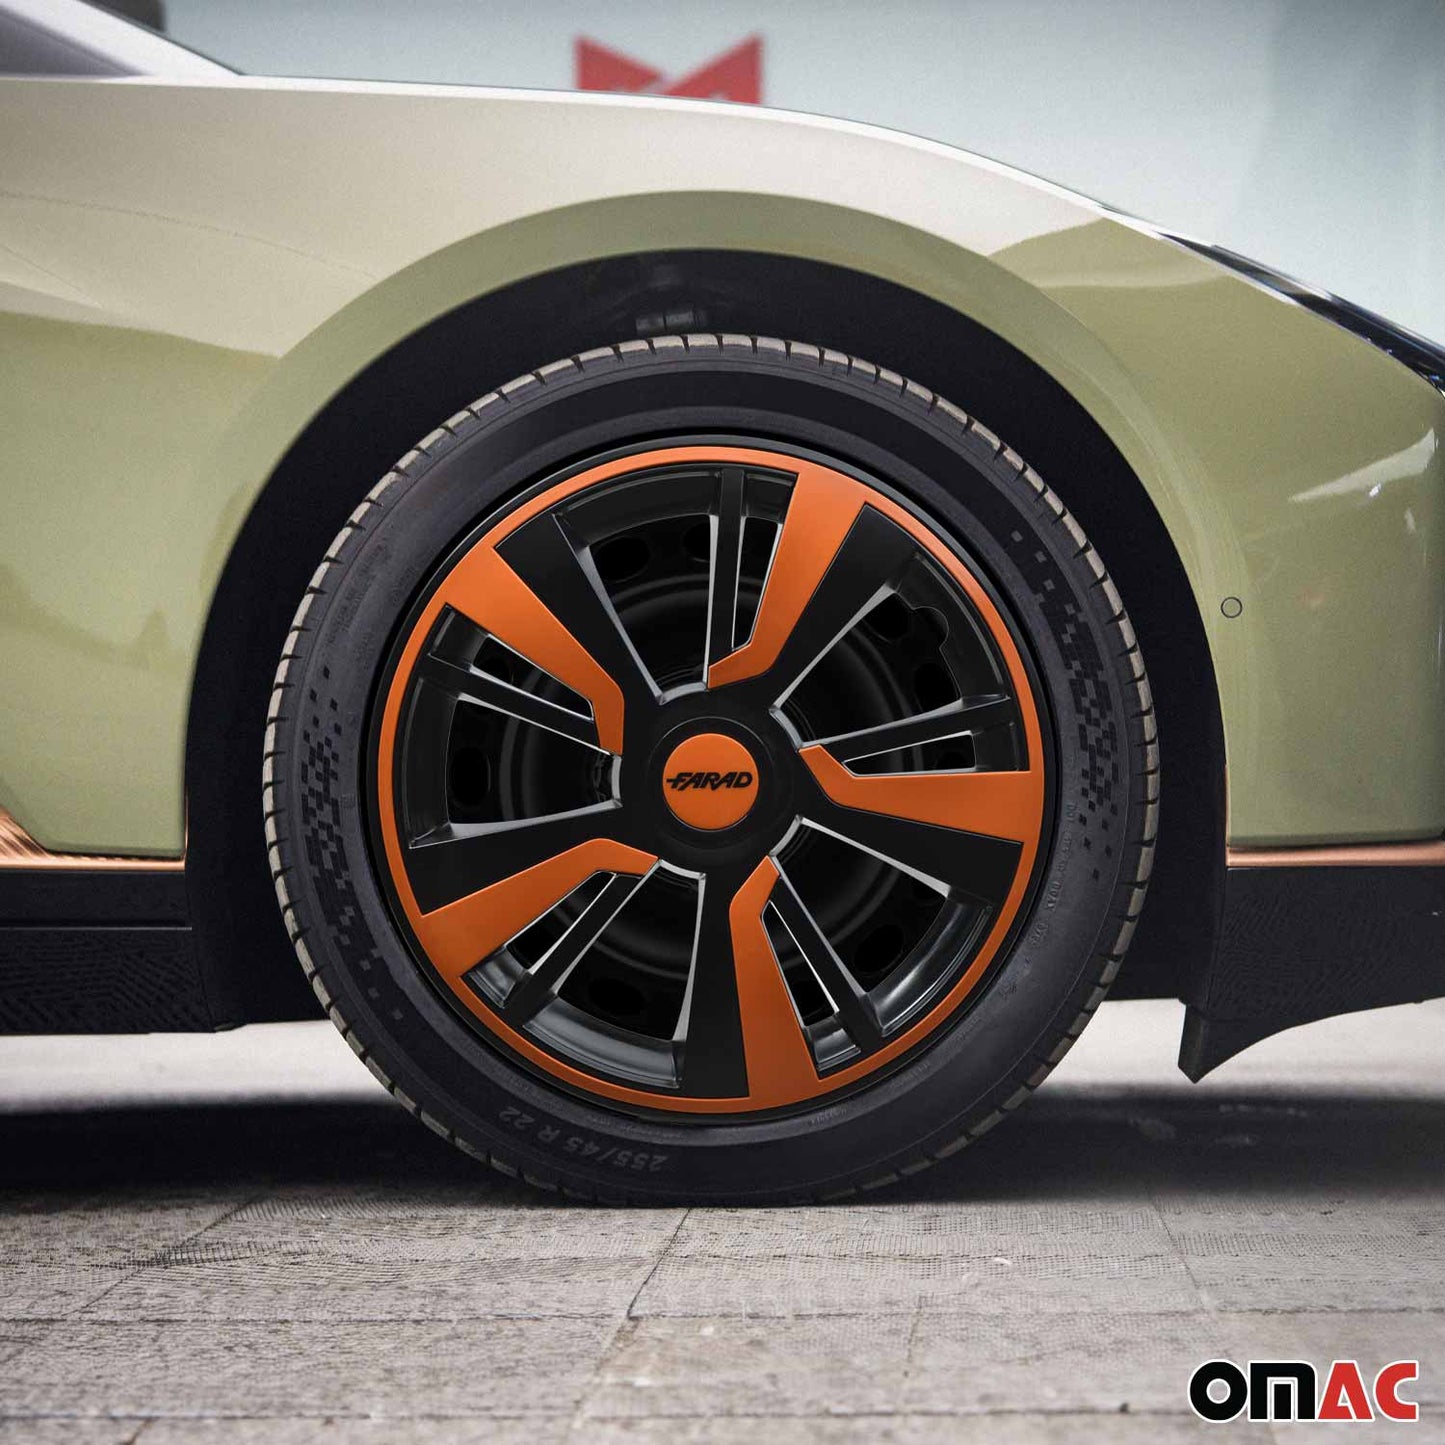 OMAC 15" Hubcaps Wheel Rim Cover Black with Orange Insert 4pcs Set VRT99FR243B15O